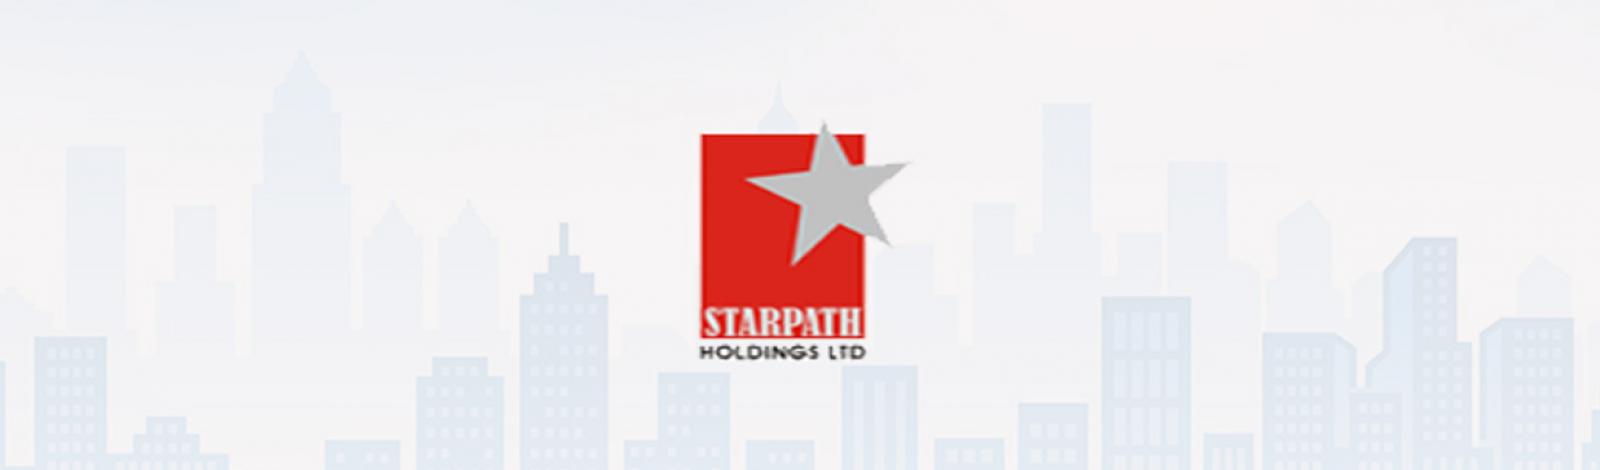 Starpath Holdings Ltd. banner